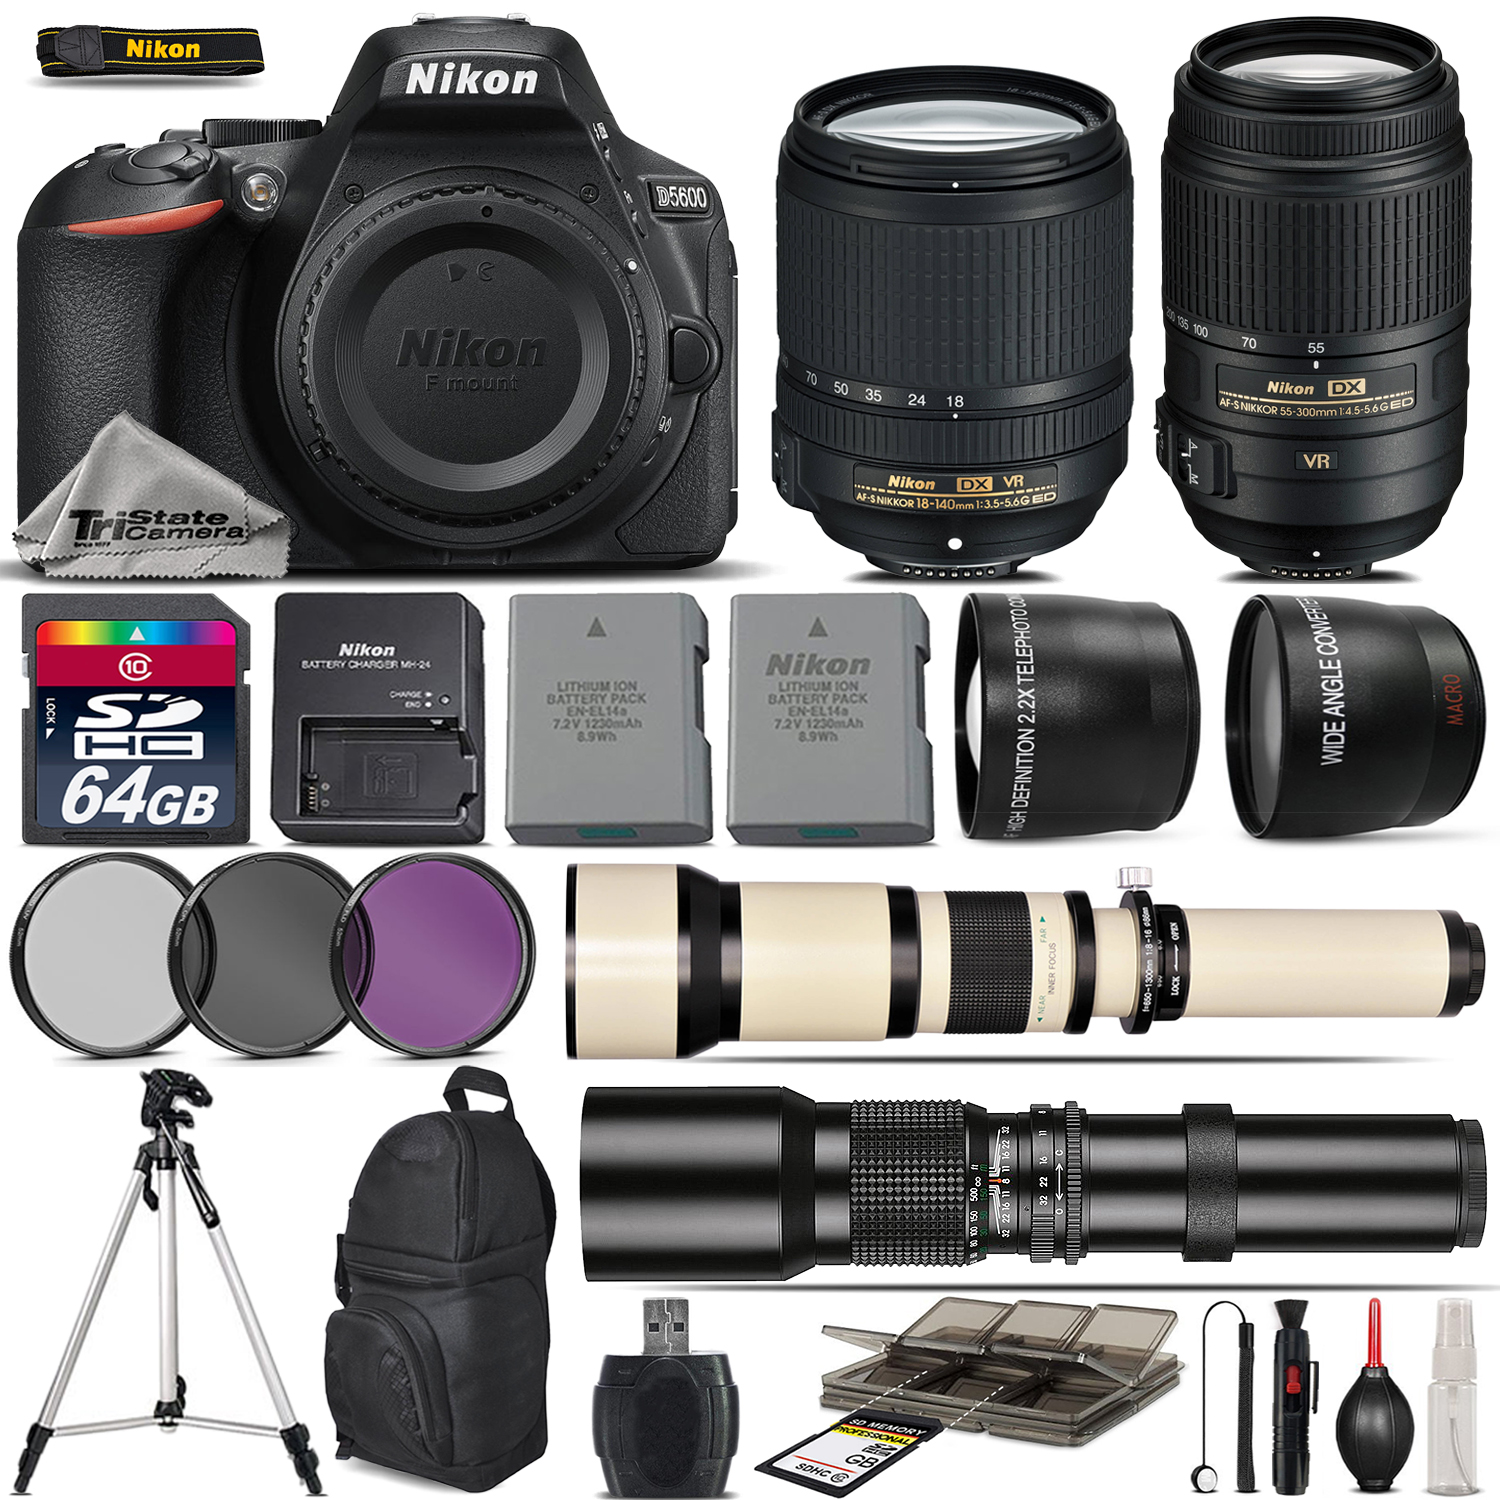 Nikon D5600 DSLR Camera with 18-140mm Lens (Black) Camera - 1577